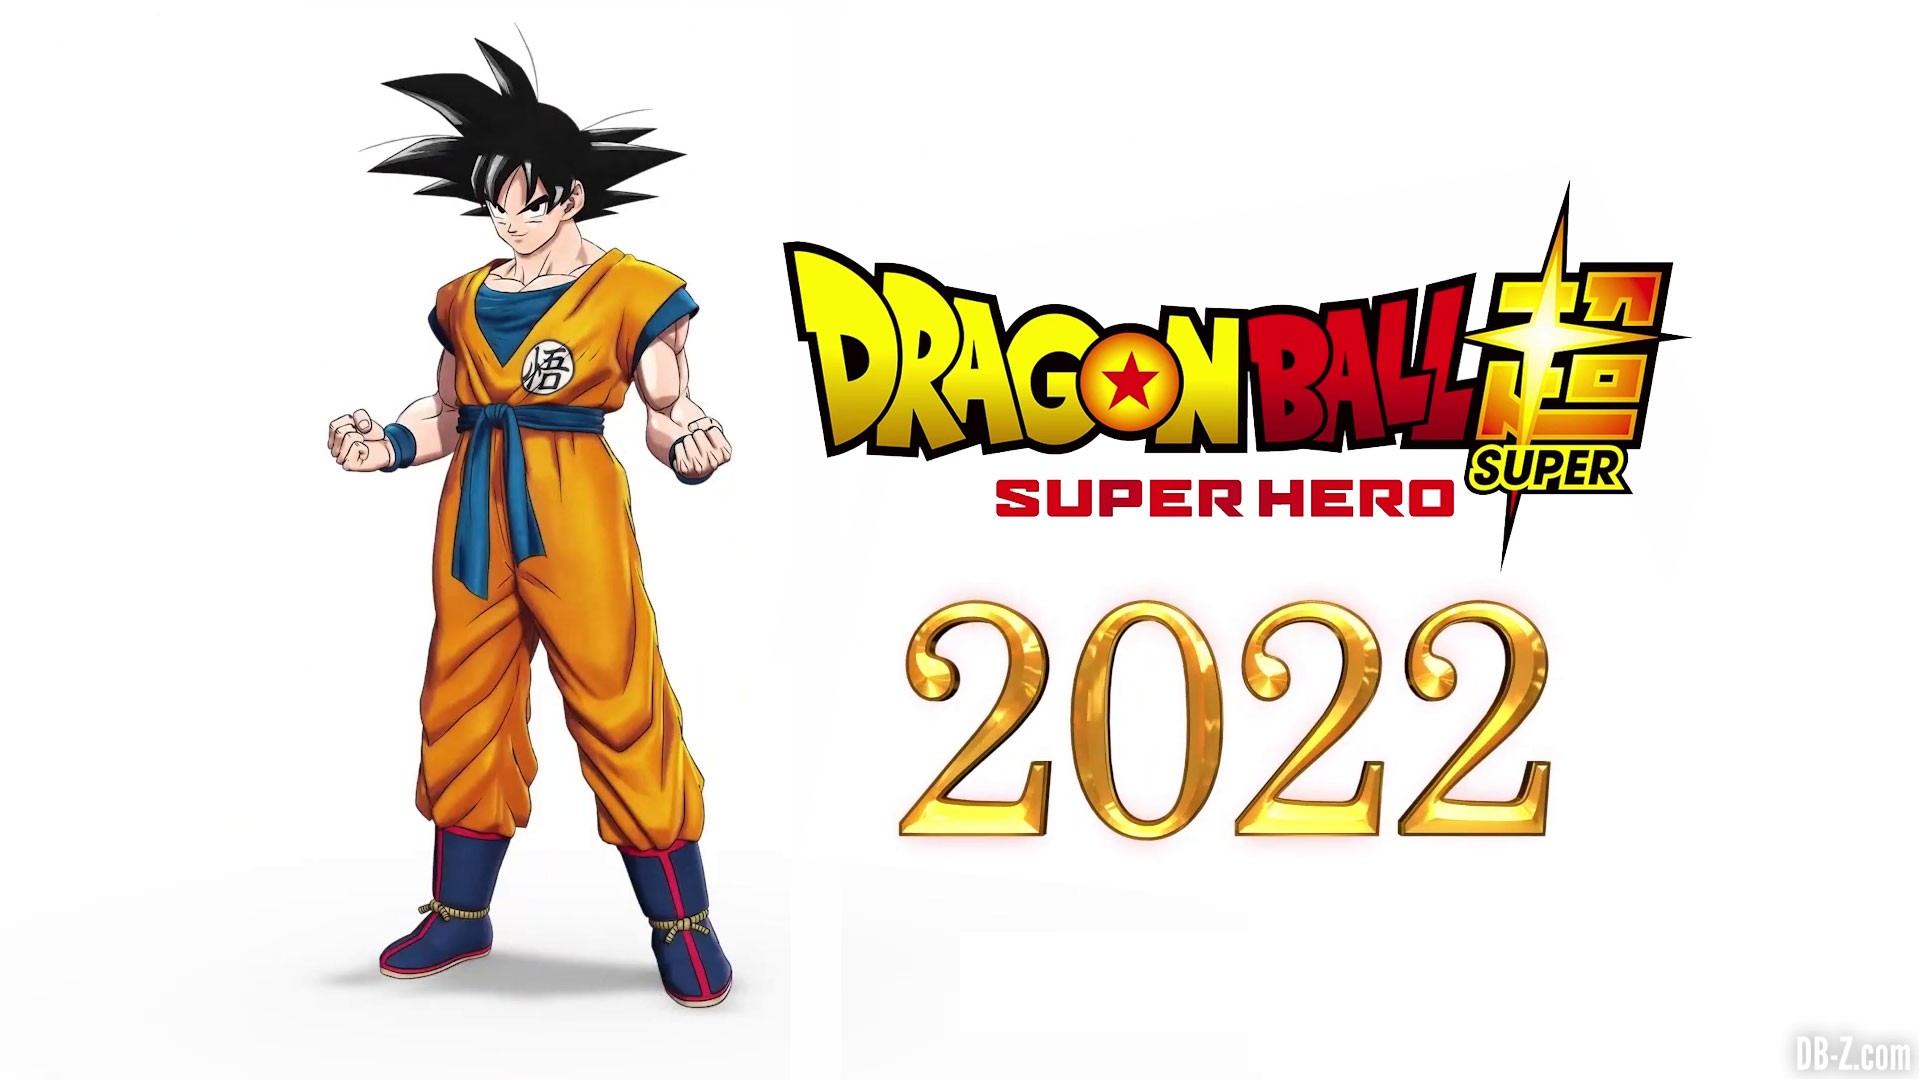 Dragon Ball Super : Le film "Super Hero" fera un grand saut dans le temps